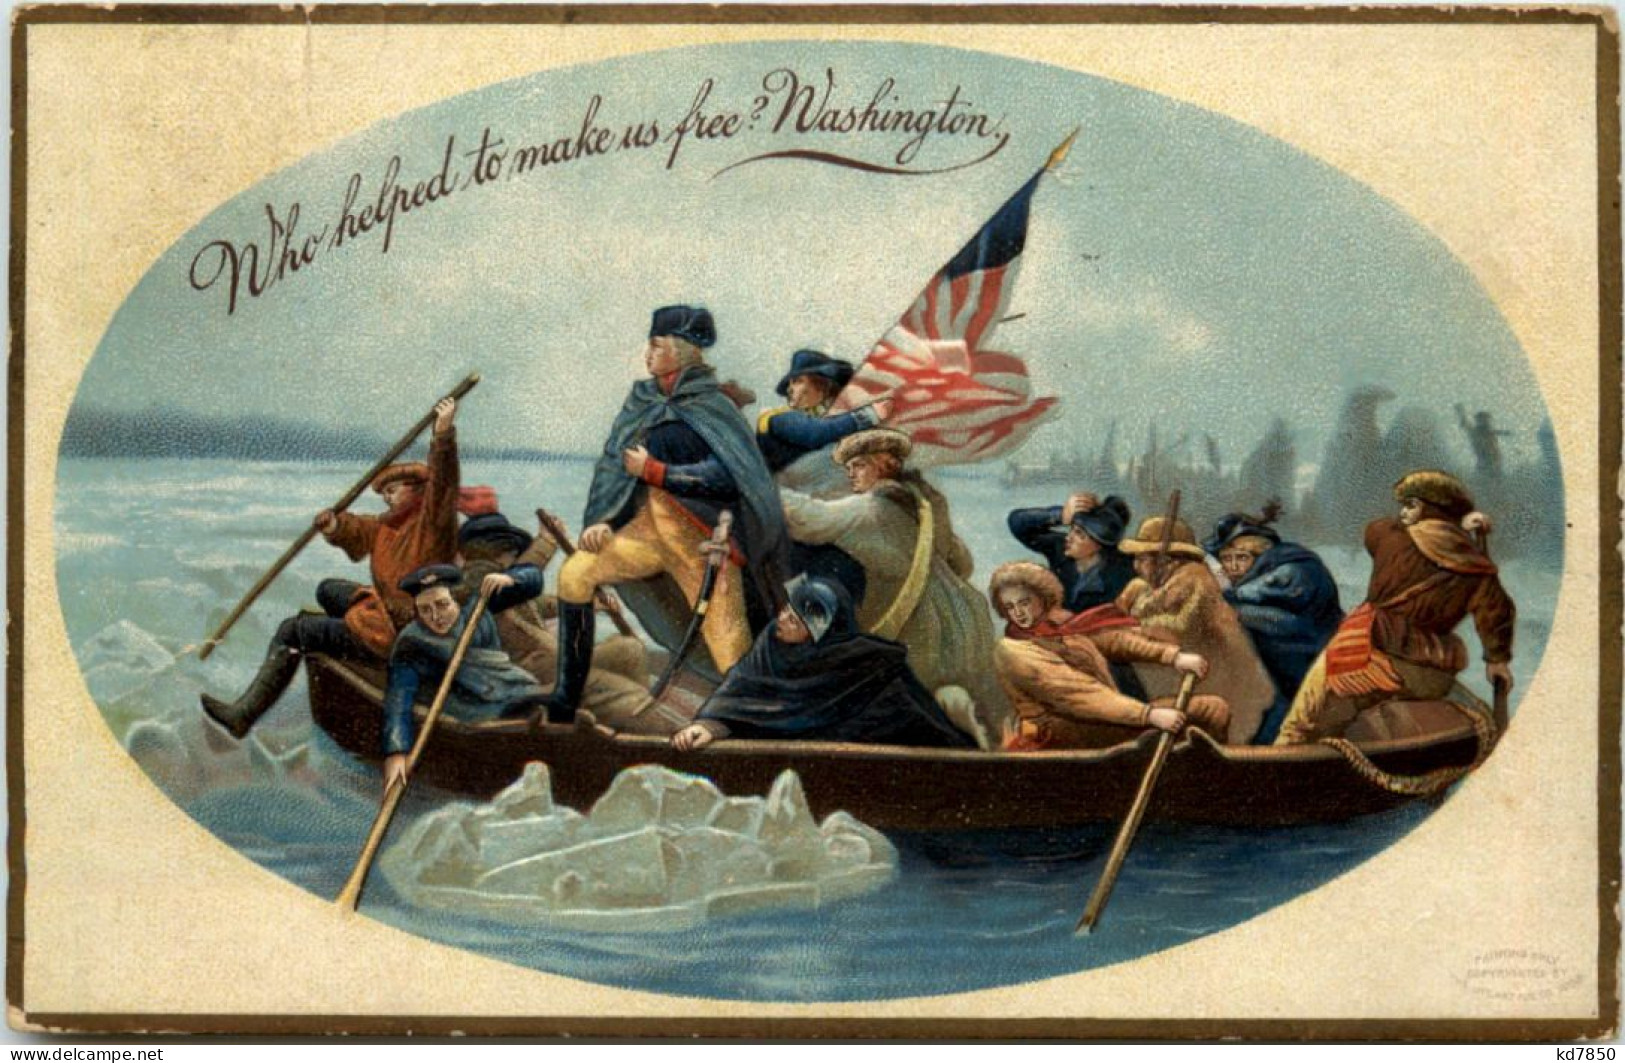 George Washington - Who Helped To Make Us Free? - Präsidenten